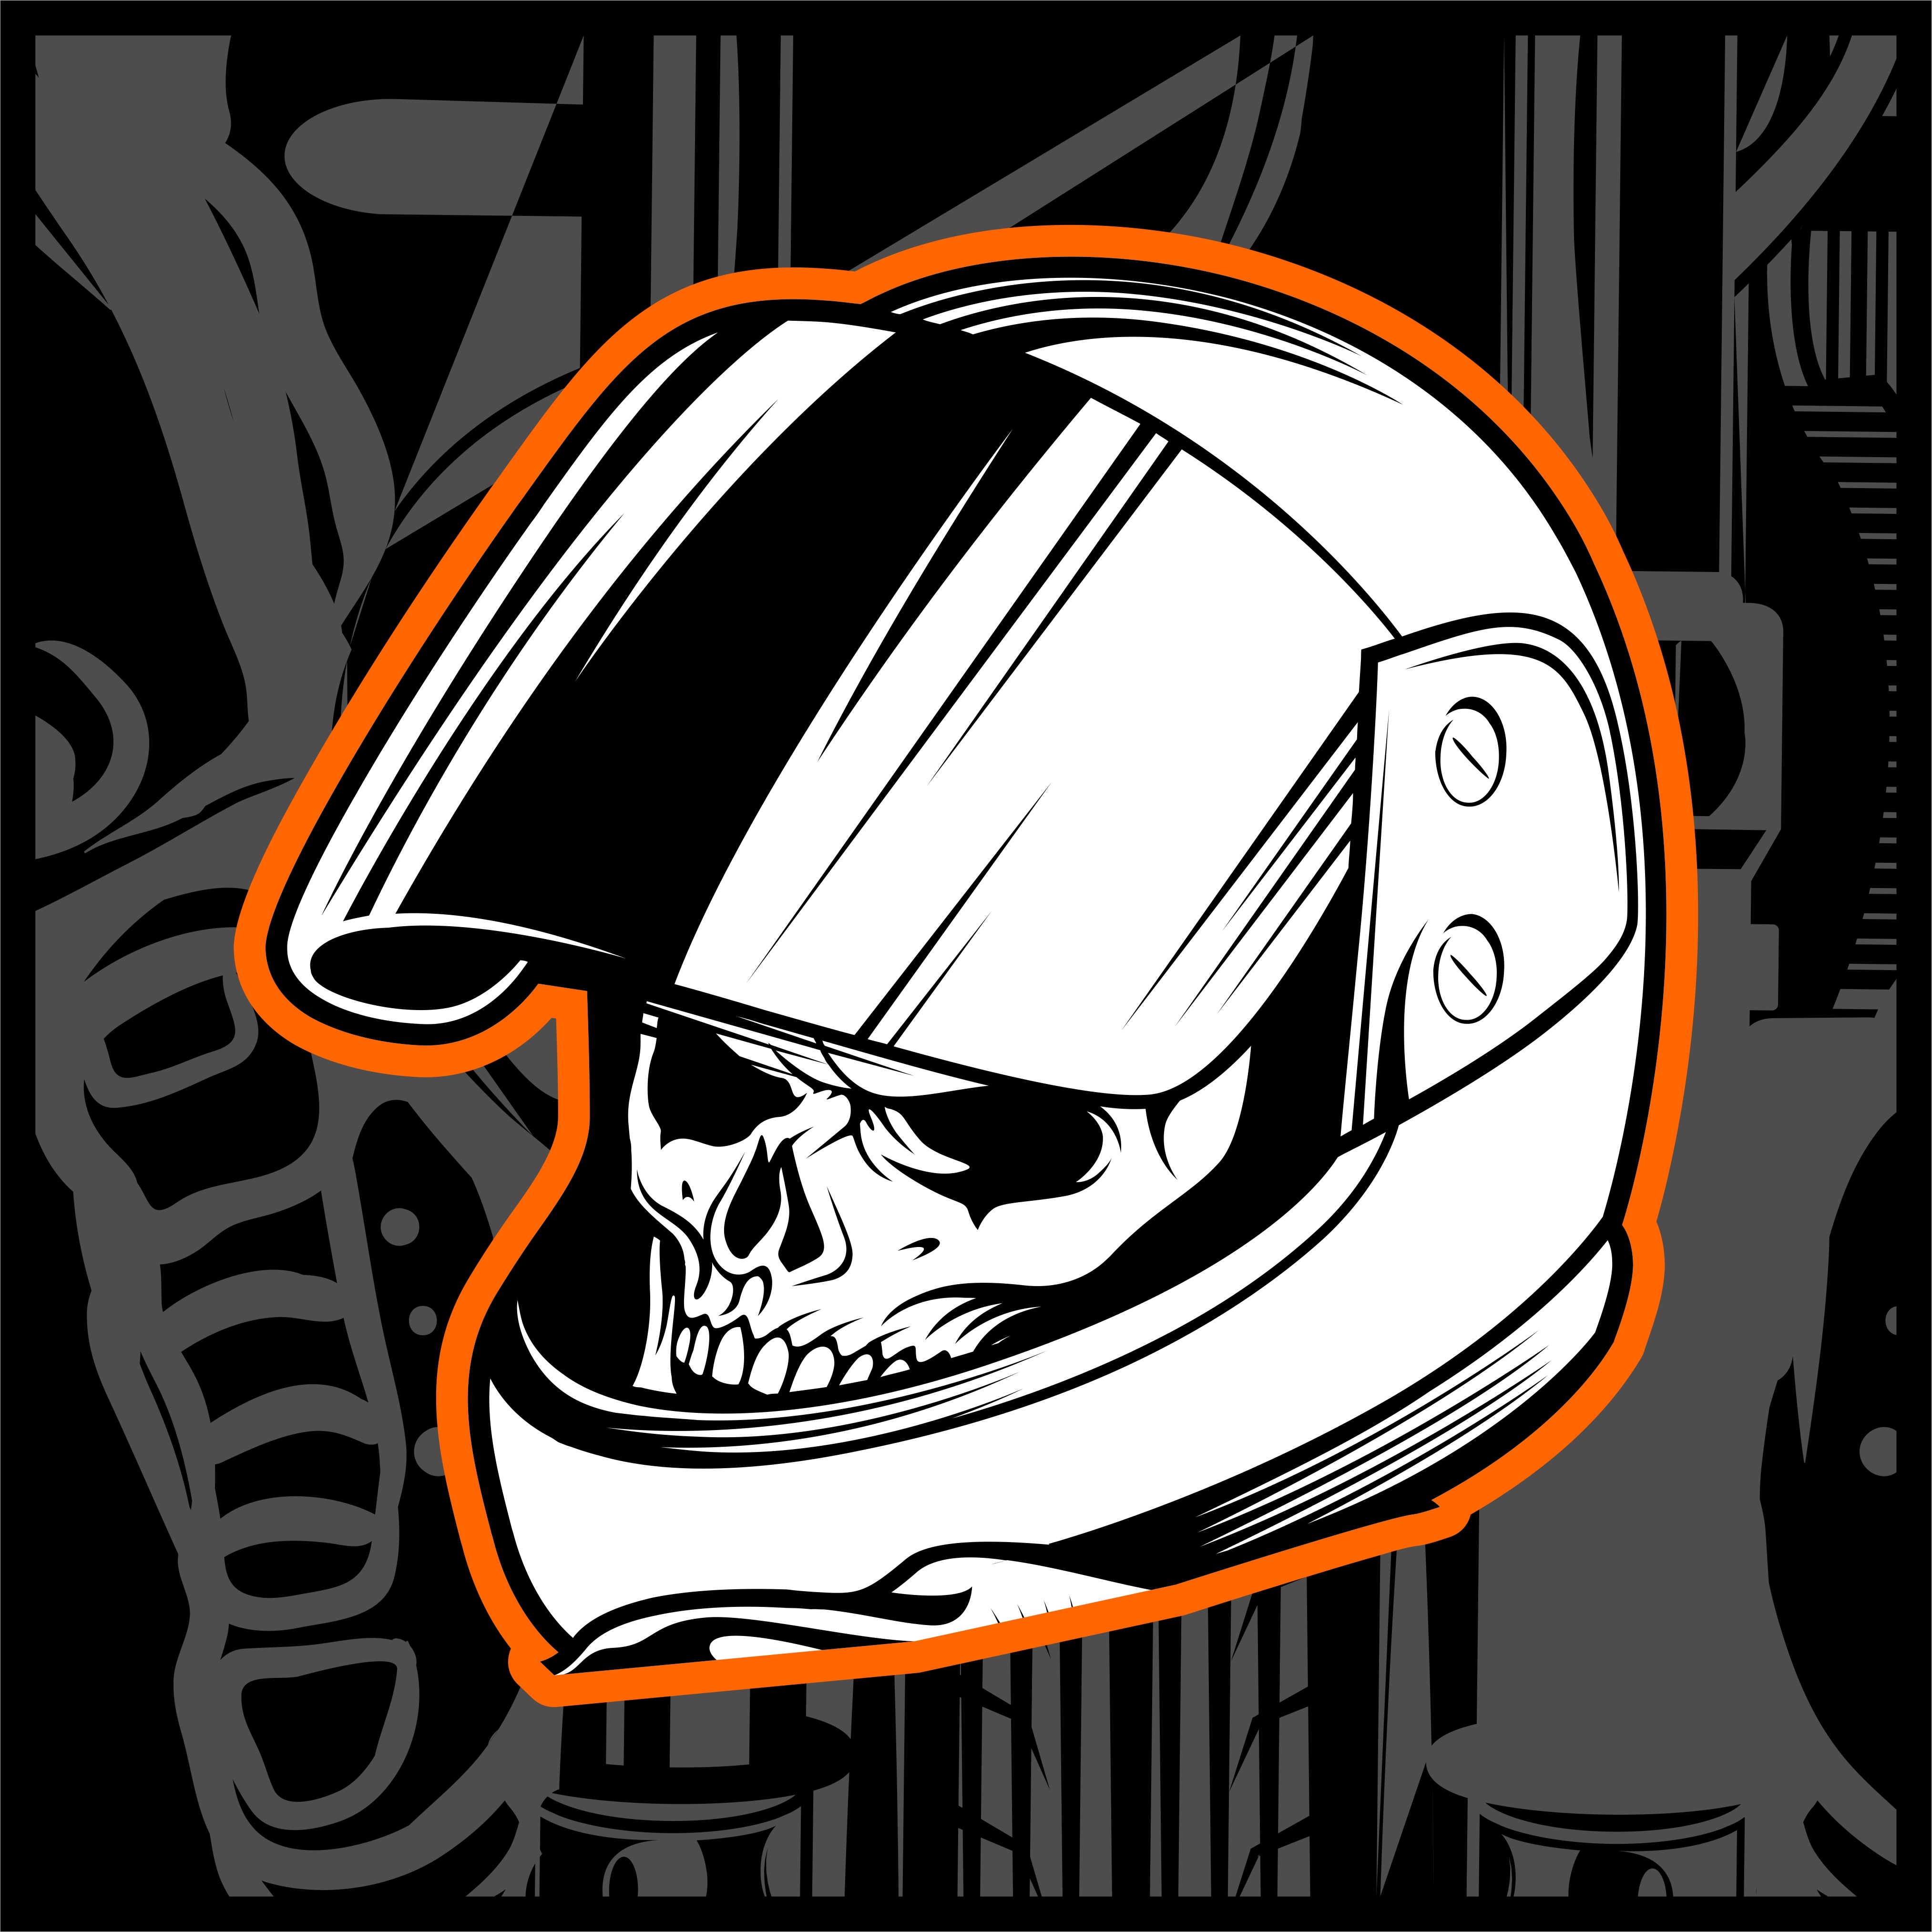 Skull Helmet Hand Drawing Vector Download Free Vectors Clipart Graphics Vector Art